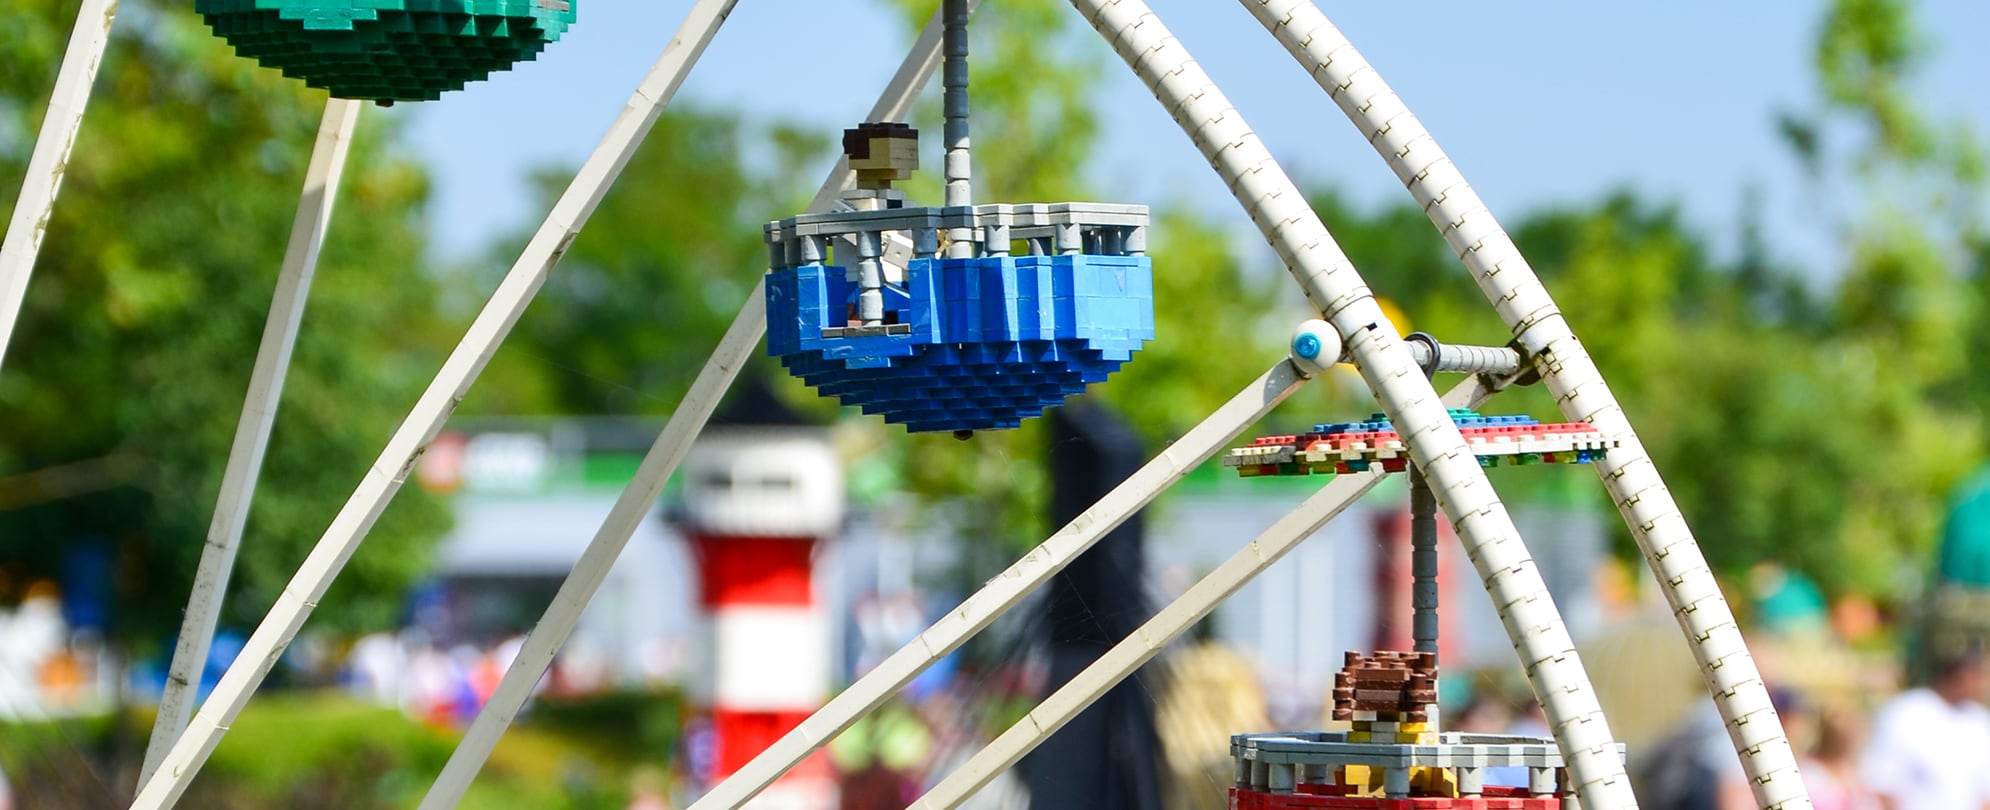 A ferris wheel made of legos at Legoland, a theme park in Orlando, Florida. 